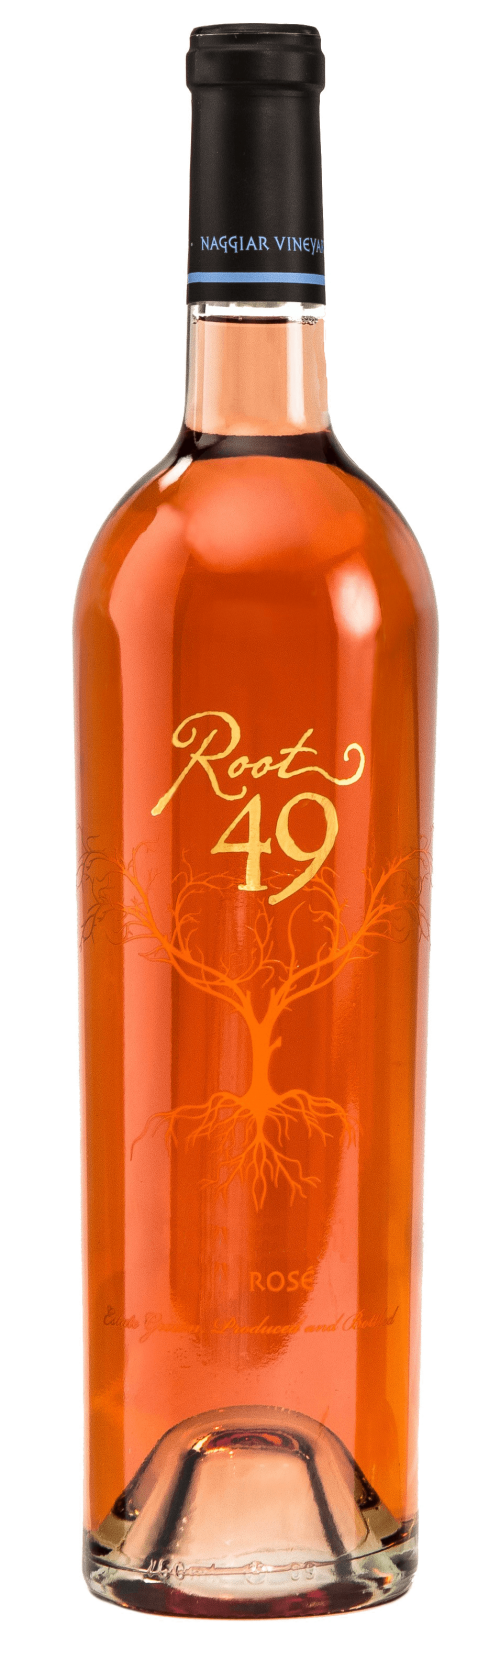 Root 49 Rose Wine Bottle